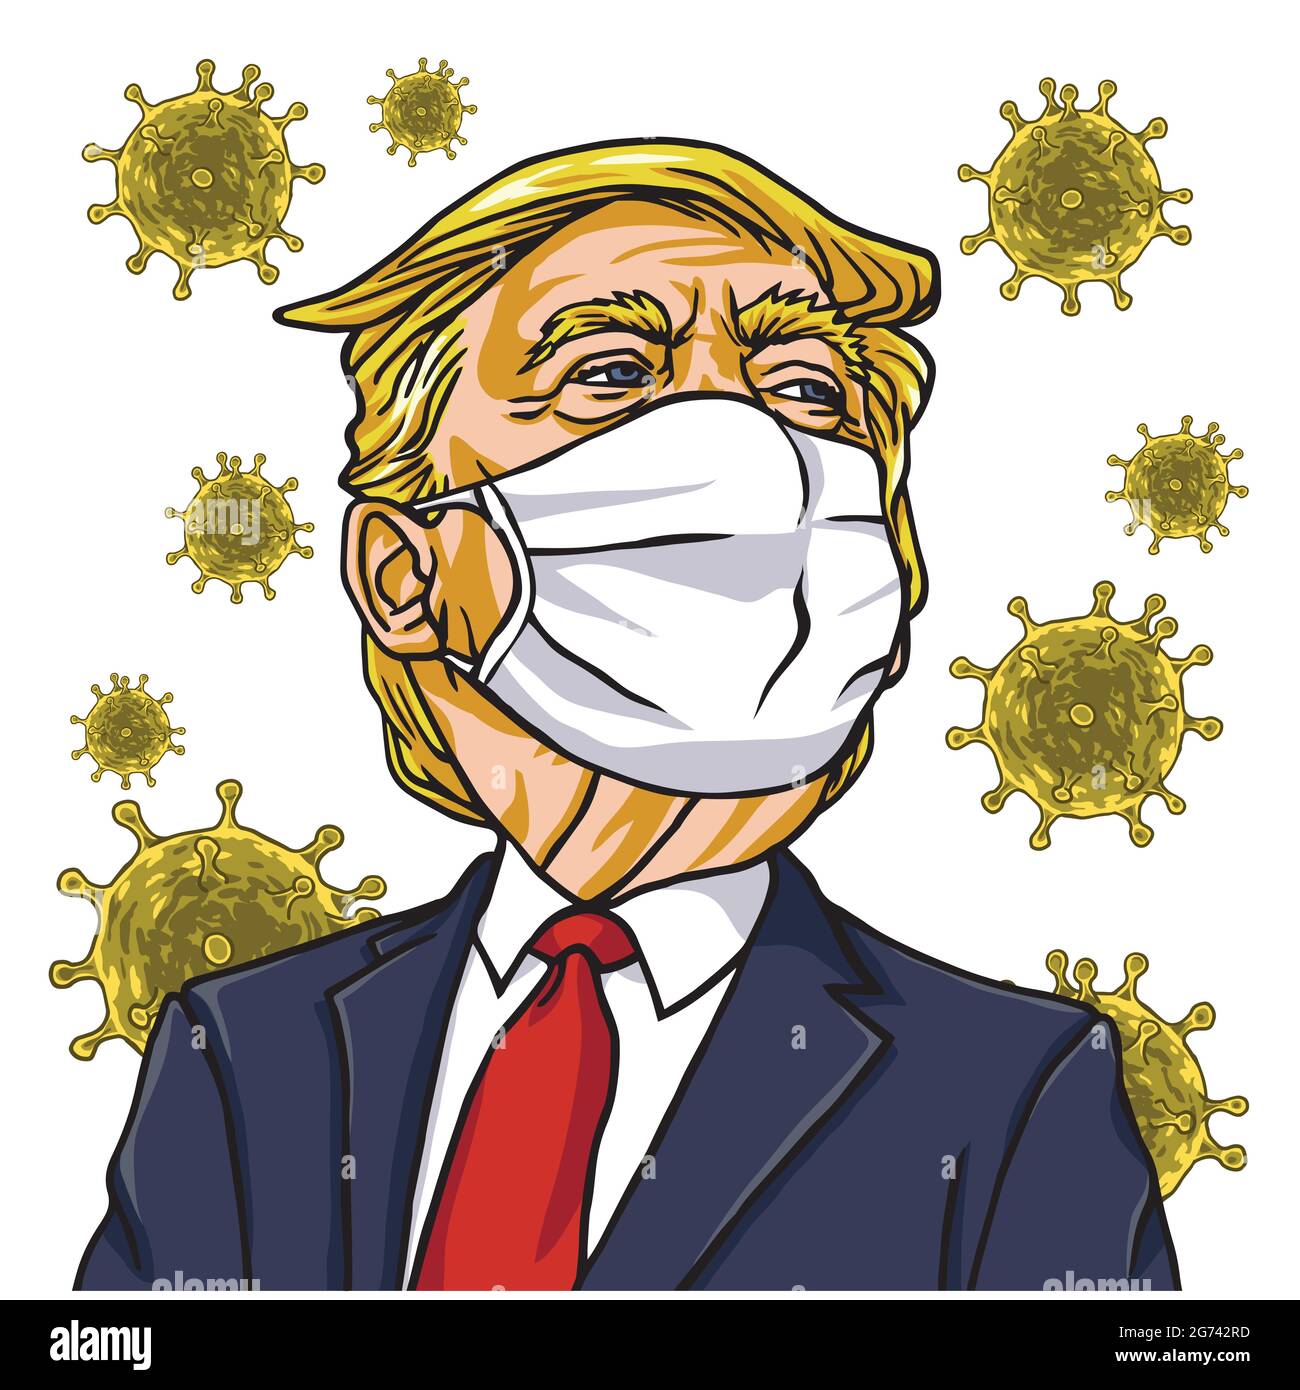 Donald Trump Wearing Corona Virus Mask Cartoon Vector Drawing. March 12 , 2020 Stock Vector